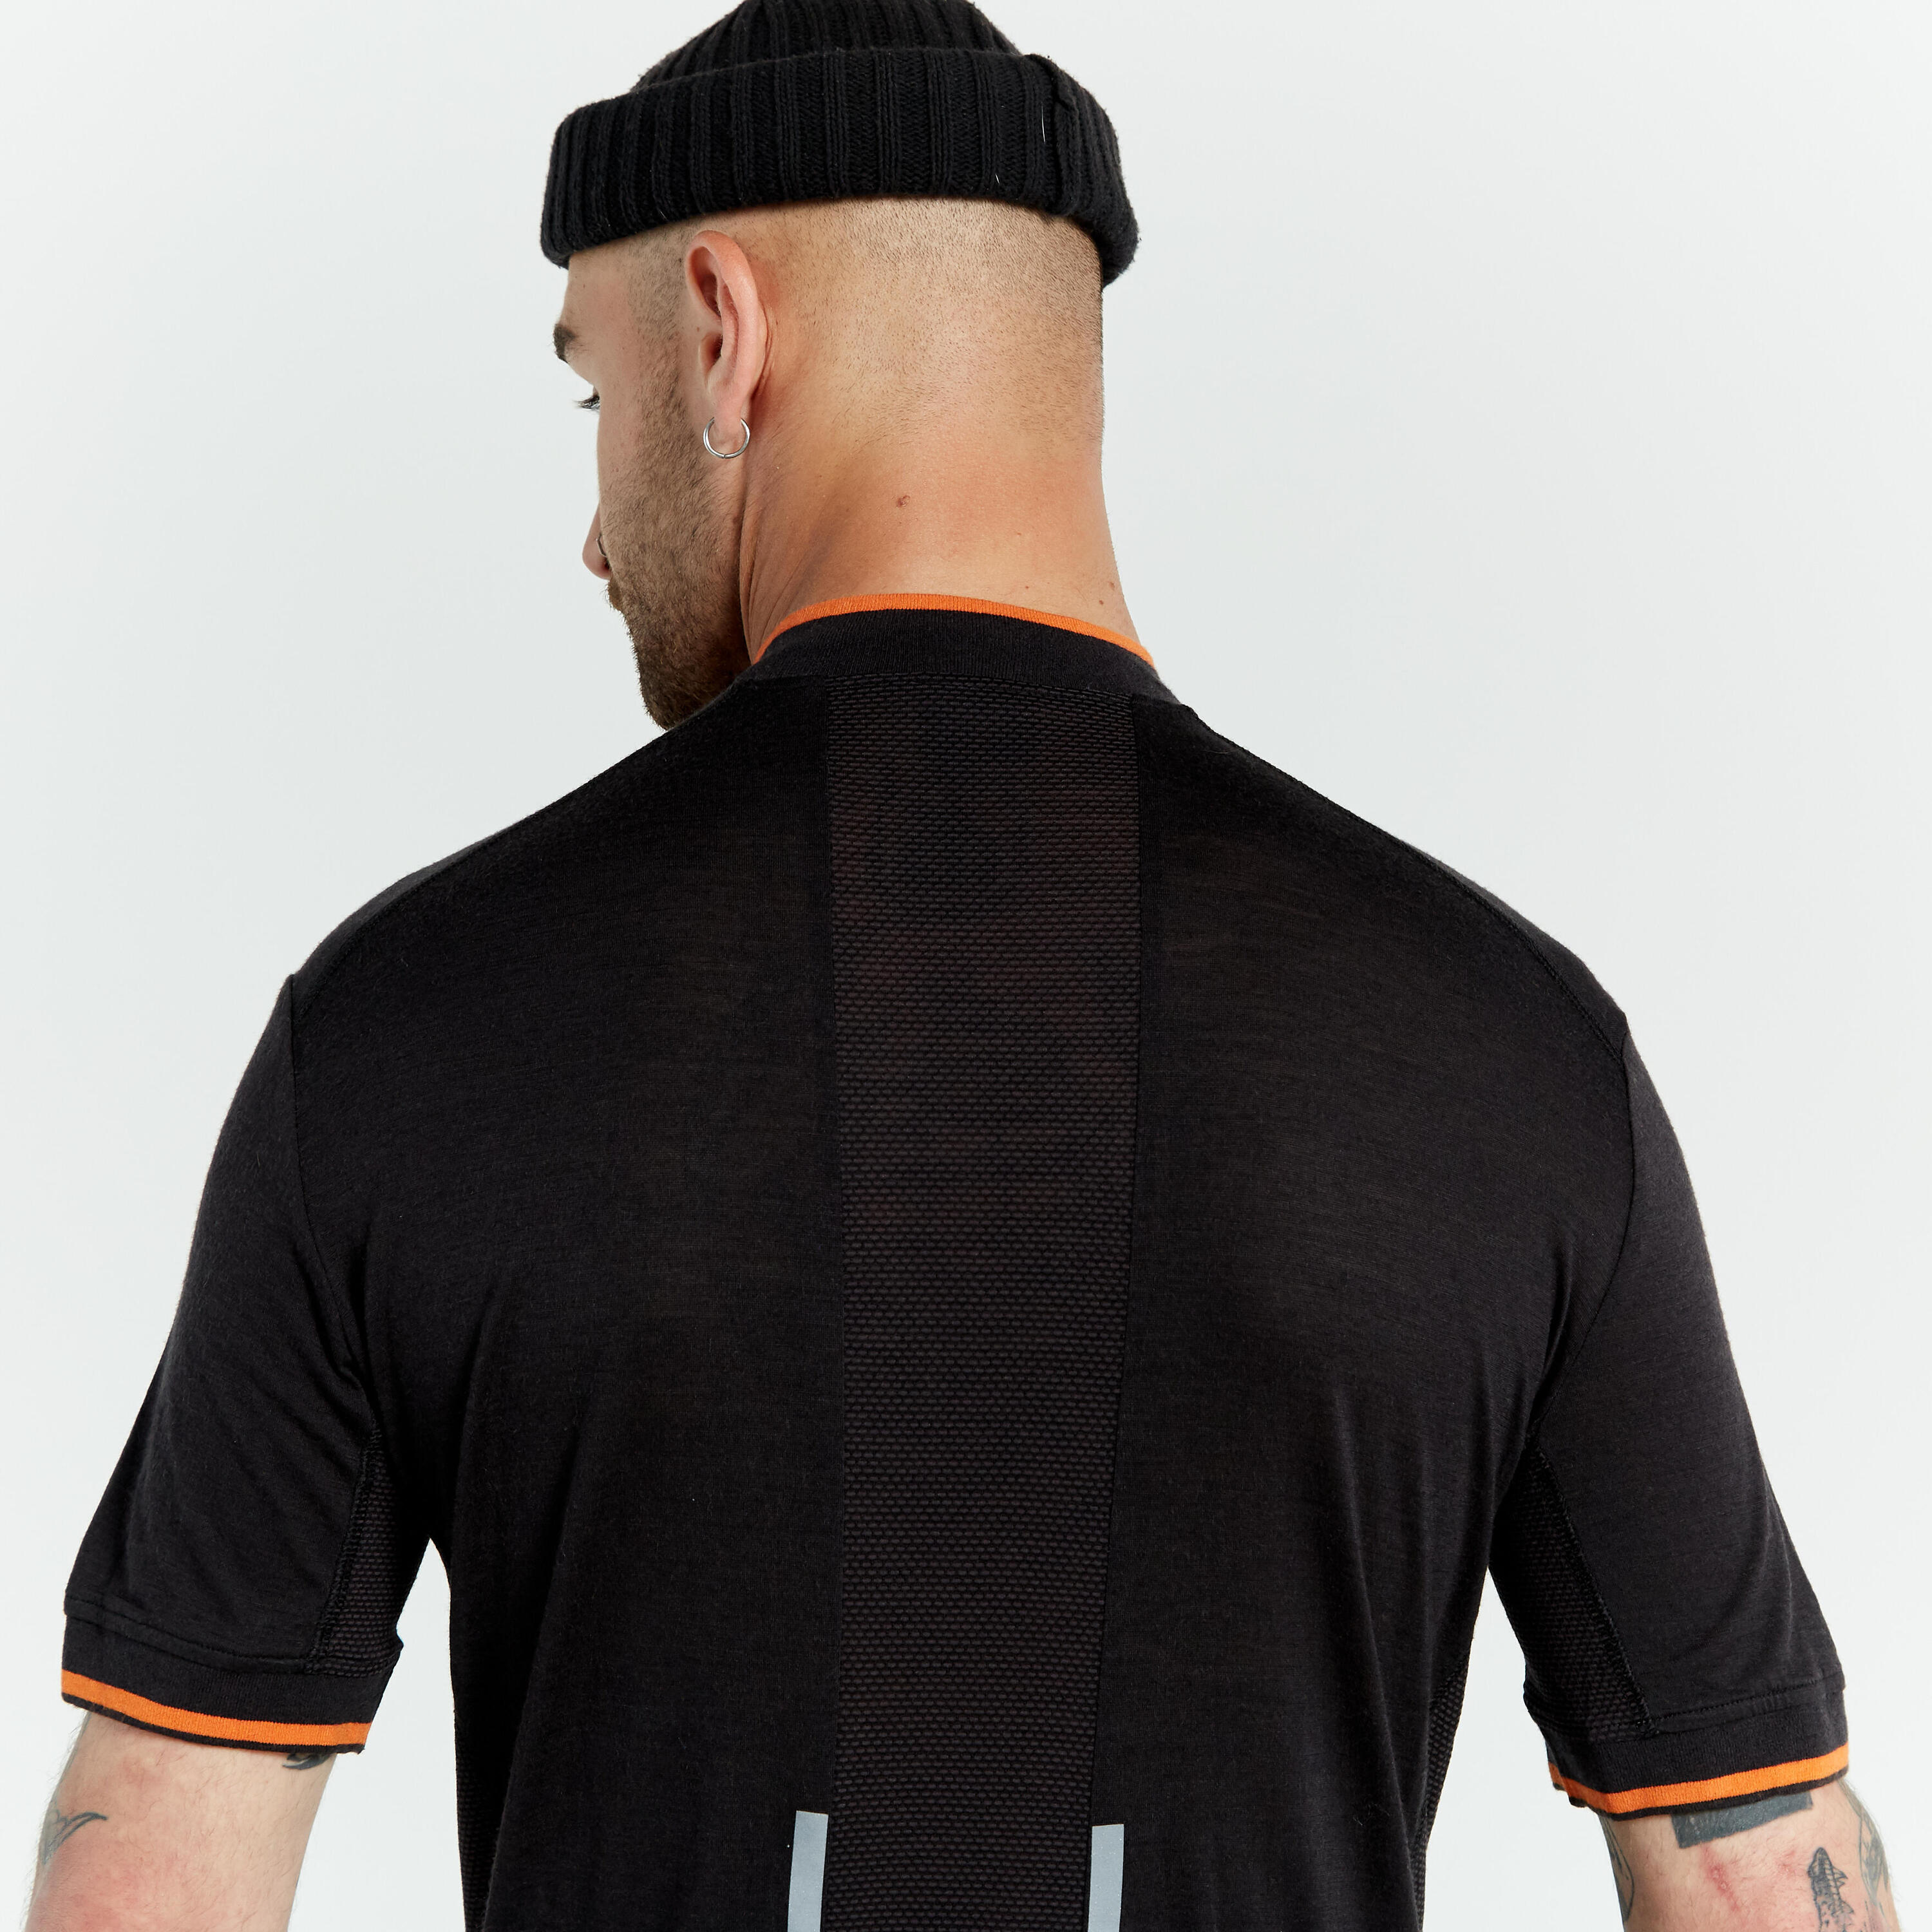 Men's Merino Short-Sleeved Cycling Jersey GRVL900 - Black 5/9